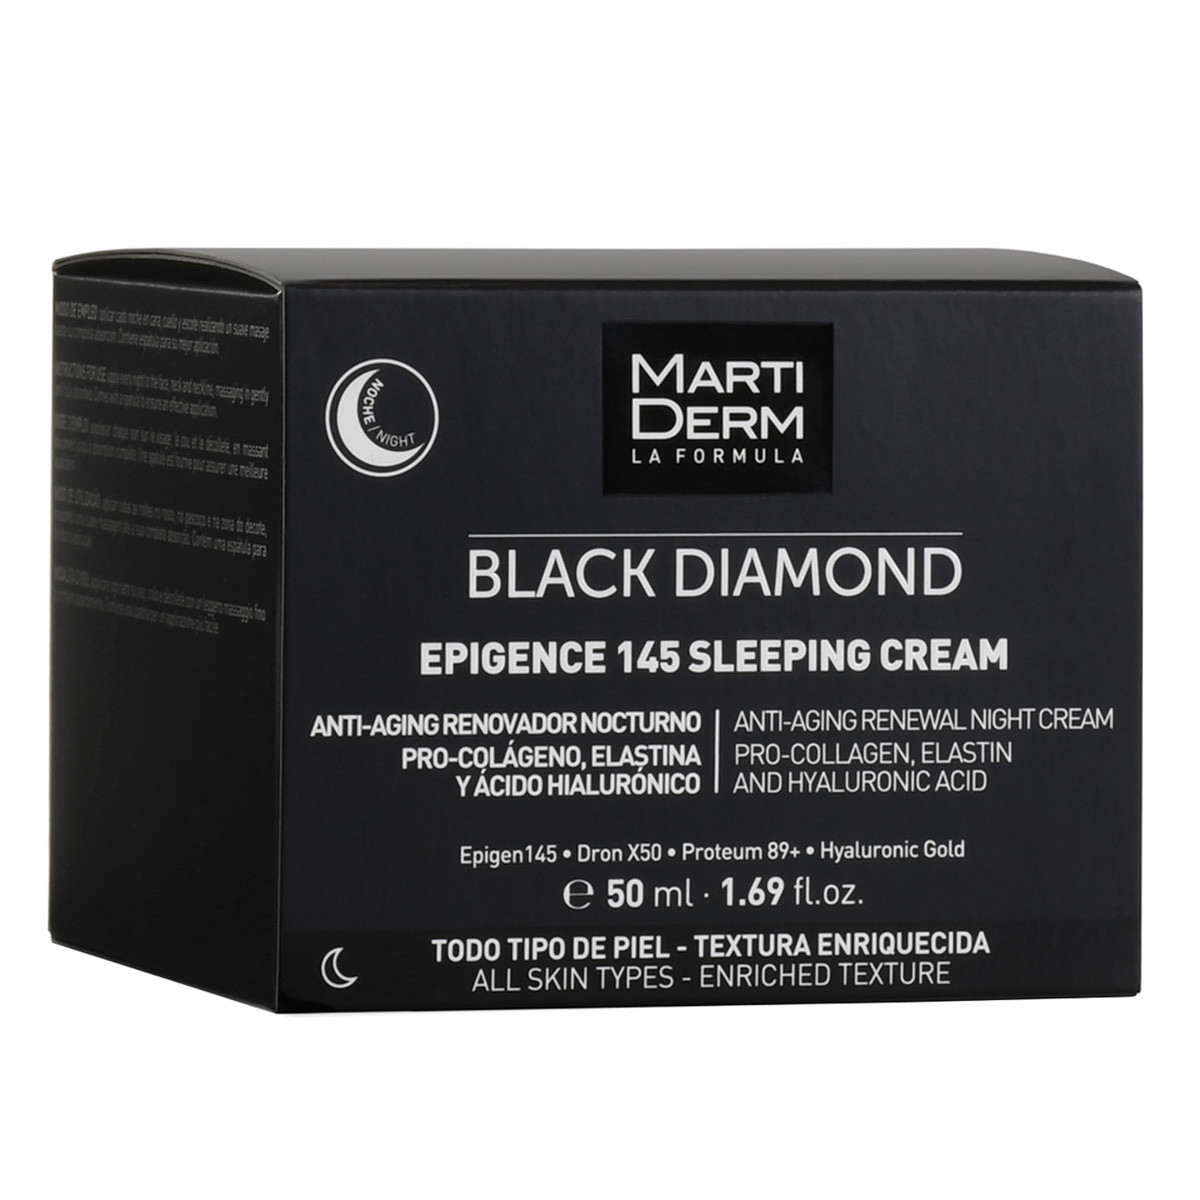 MartiDerm Black Diamond Epigence Sleeping Cream 145 50ml